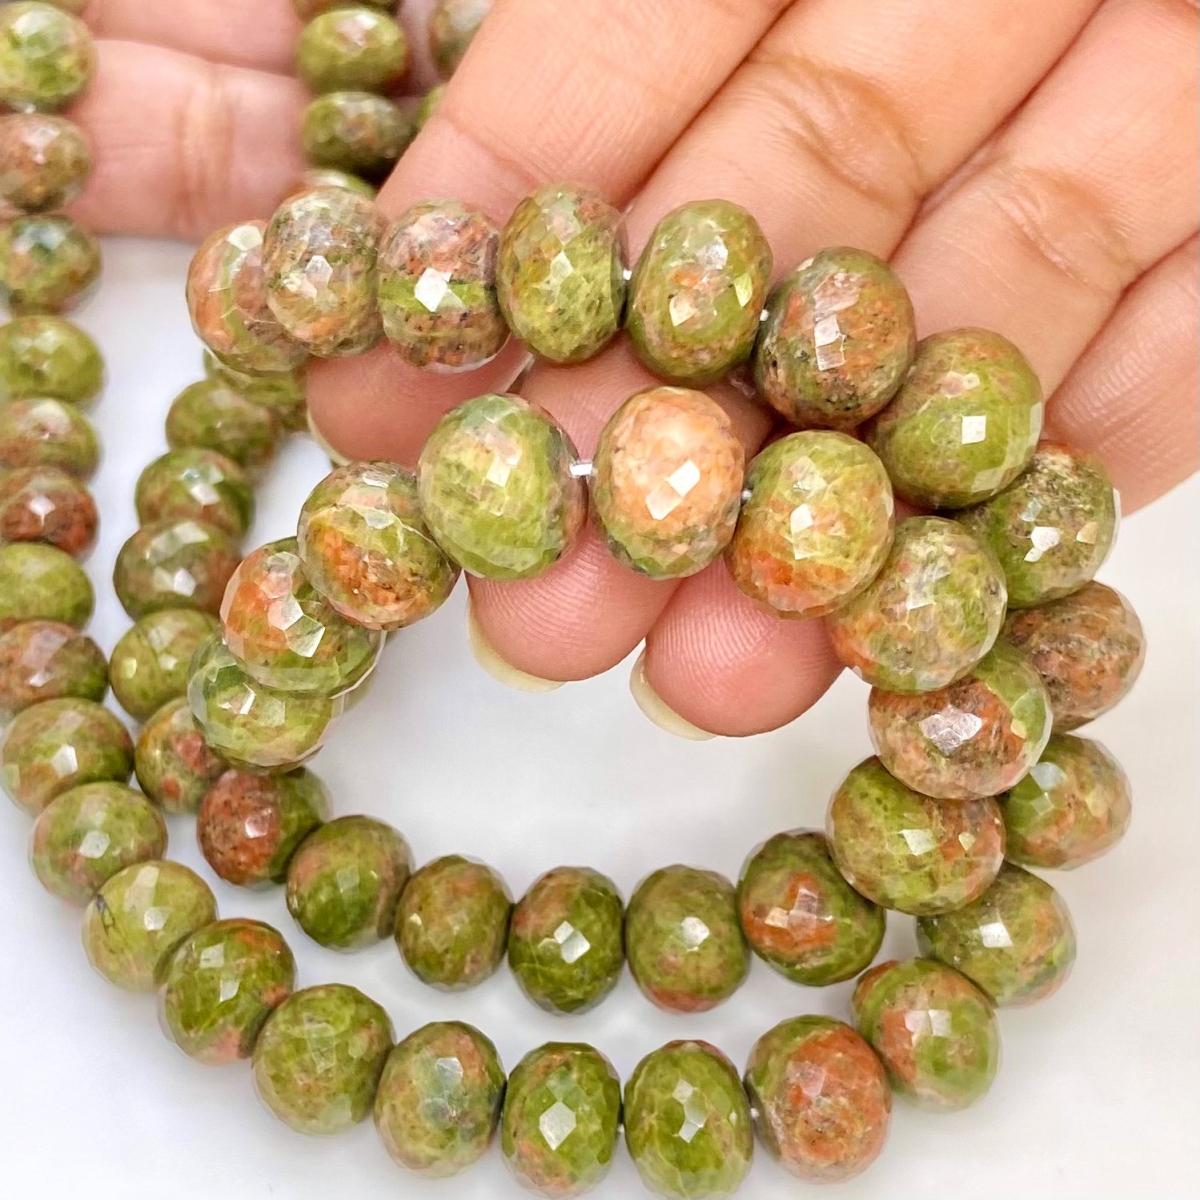 1 Strand Morganite Faceted Rondelle Shape Gemstone Beads, Gemstone